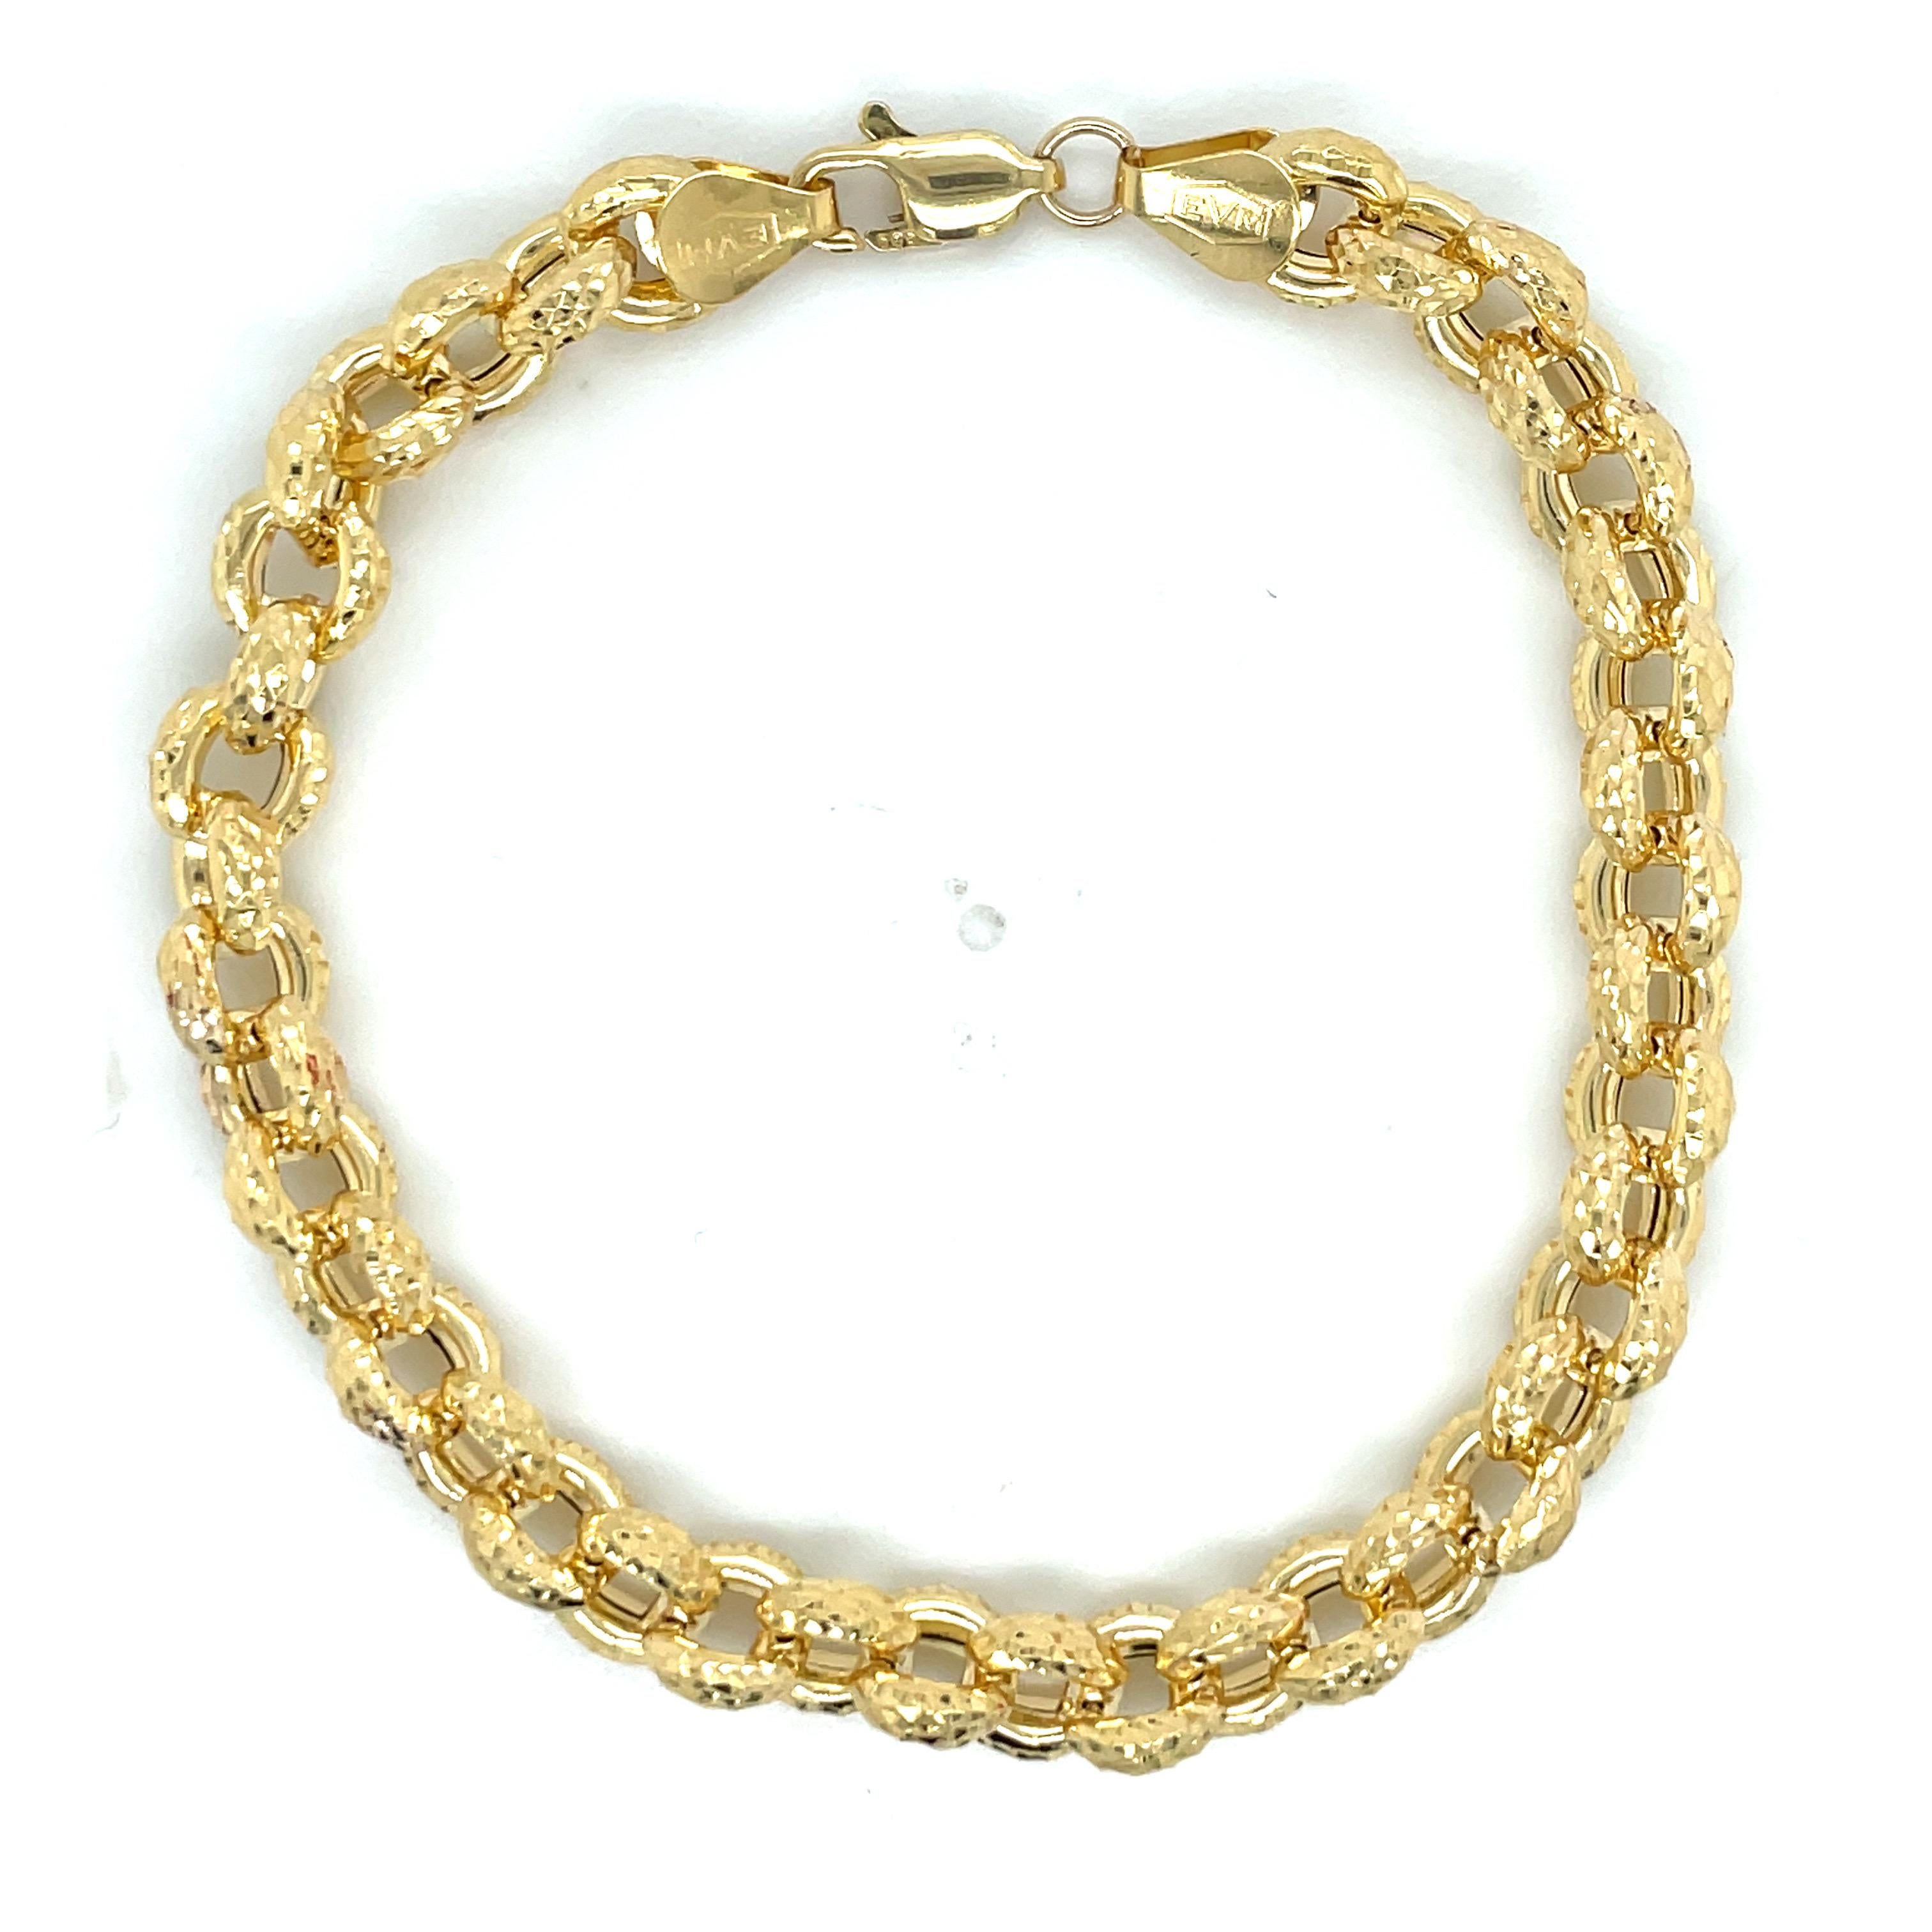 14 Karat yellow gold hammered link bracelet weighing 11.5 grams.
Matching Necklace.
DM for more information. 